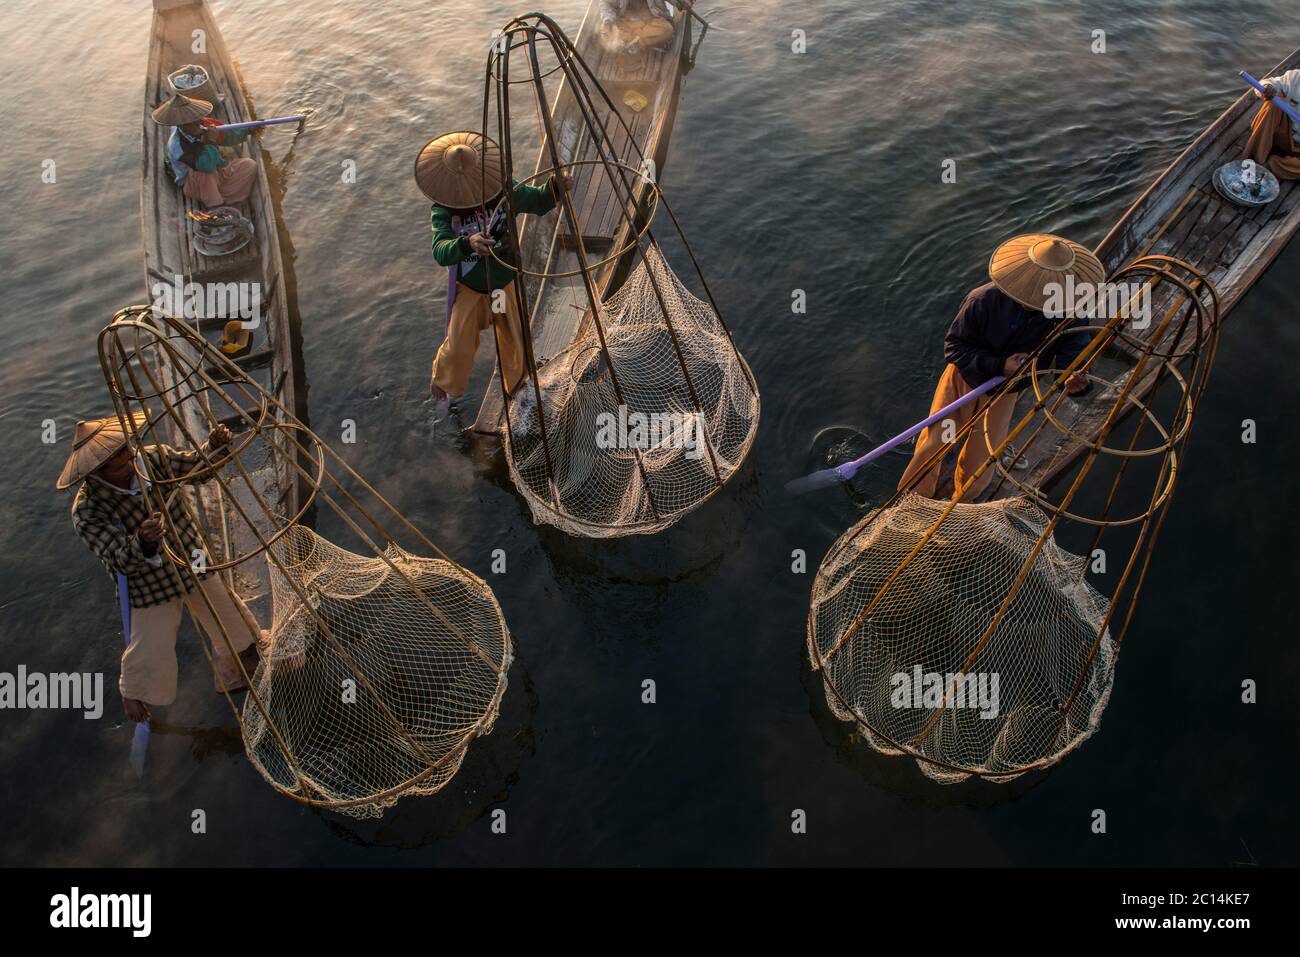 Myanmar, estado de Shan, lago Inle, pescadores que pescan con técnicas tradicionales de pesca al atardecer Foto de stock